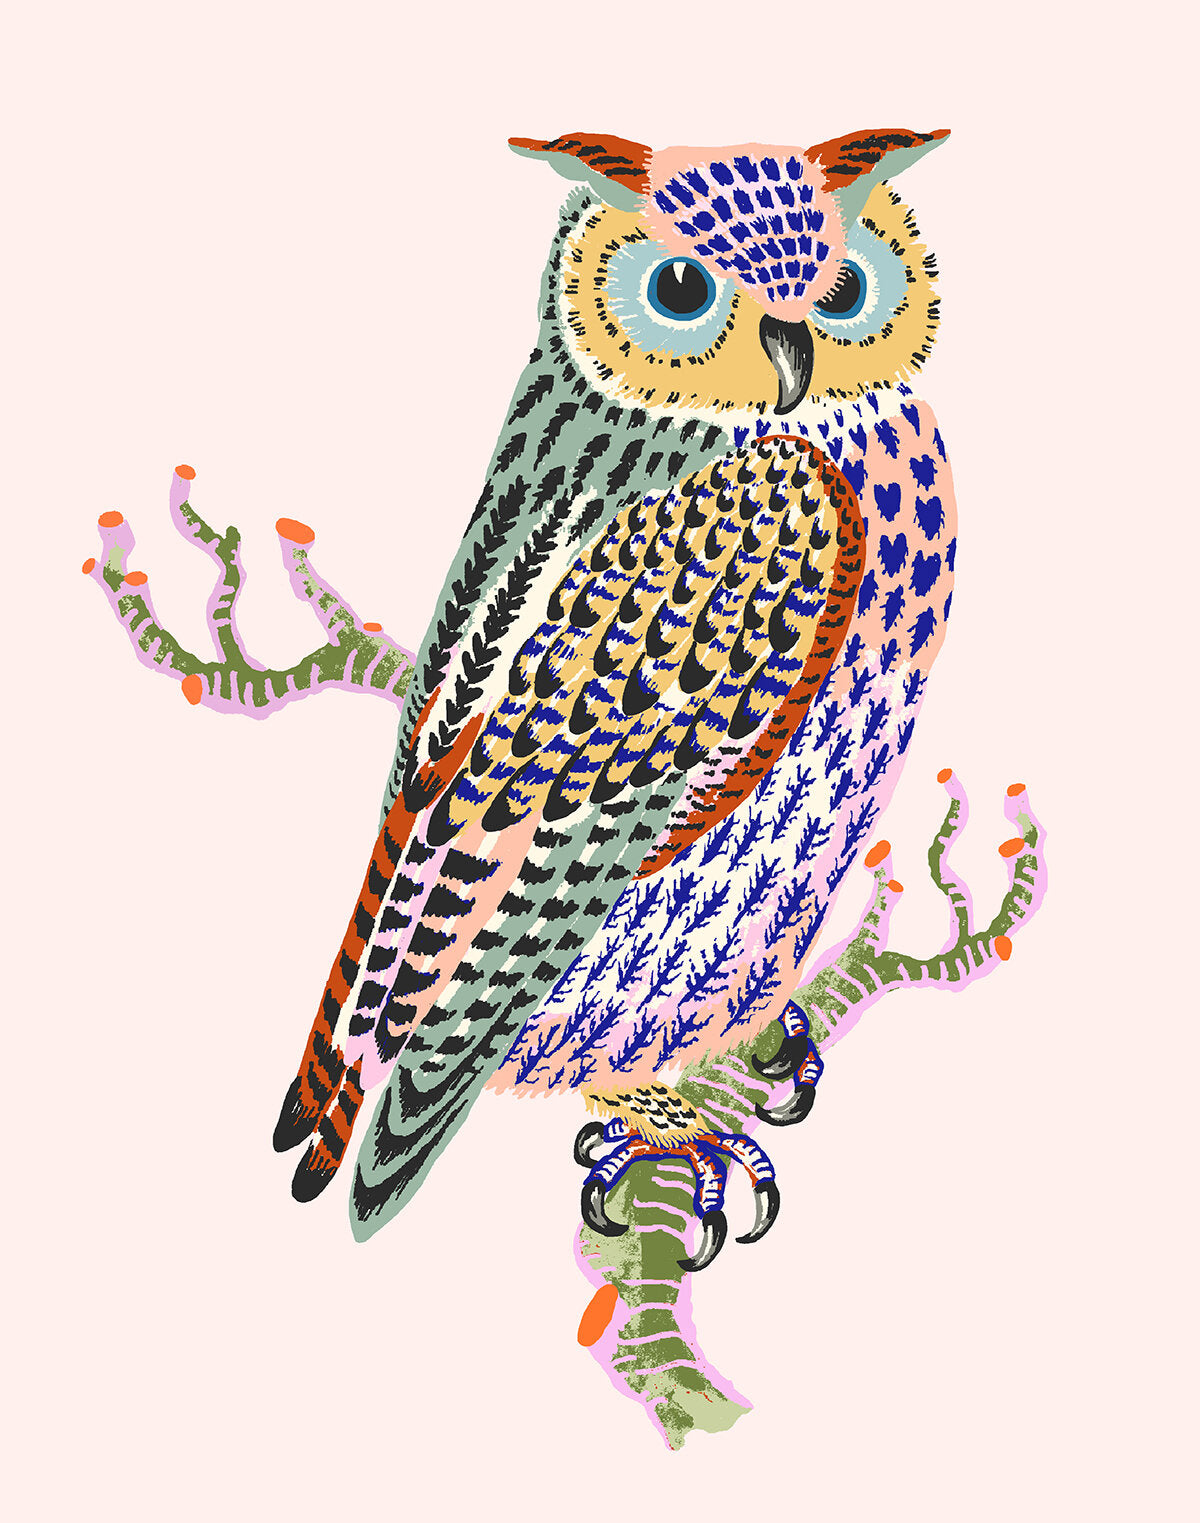 OWL MINI PRINT 8" x 10" in 2 colour options